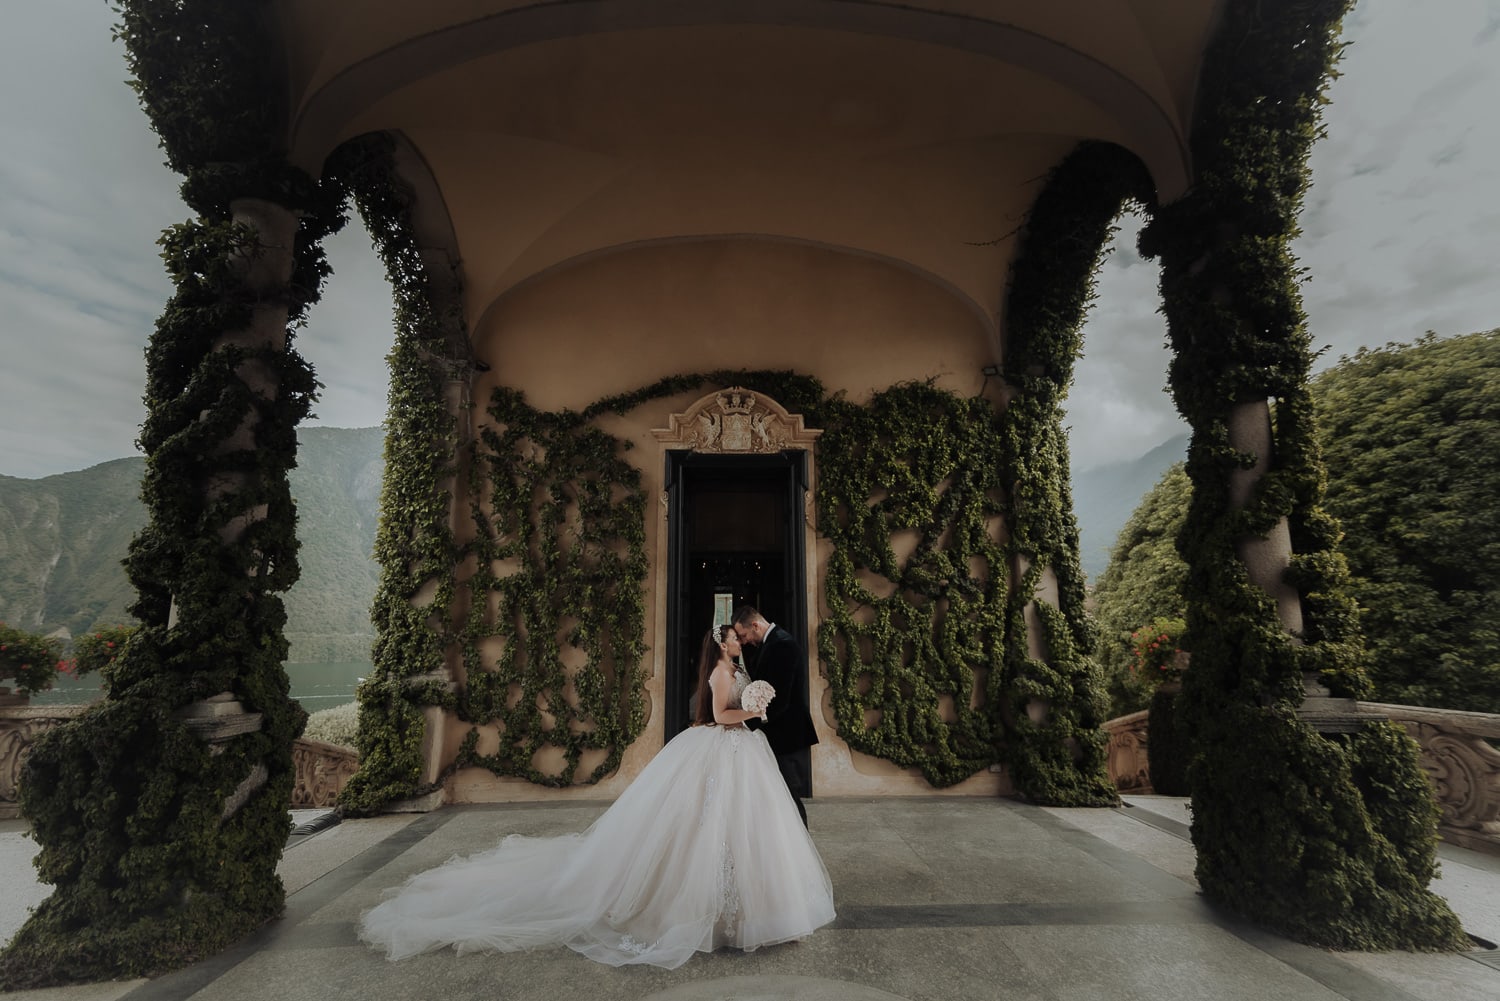 Bride and groom at loggia in Villa del Balbianello during Italy Elopement